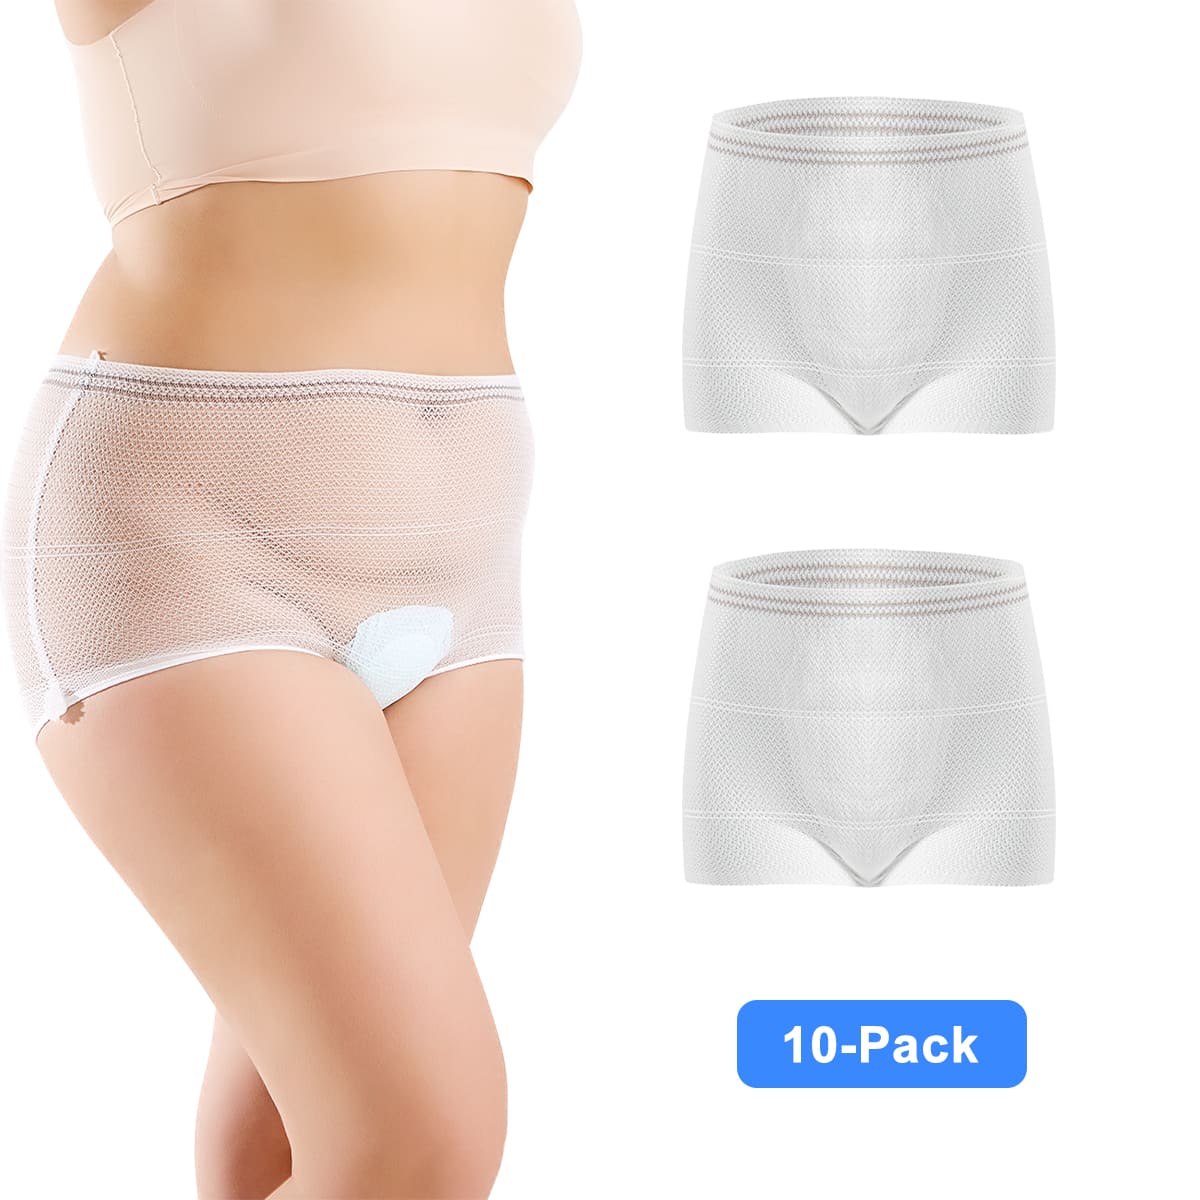 Mesh Underwear Postpartum 10 Pack Recovery Female Incontinence Protective  Panties for Women, White-4pack, M price in Saudi Arabia,  Saudi  Arabia